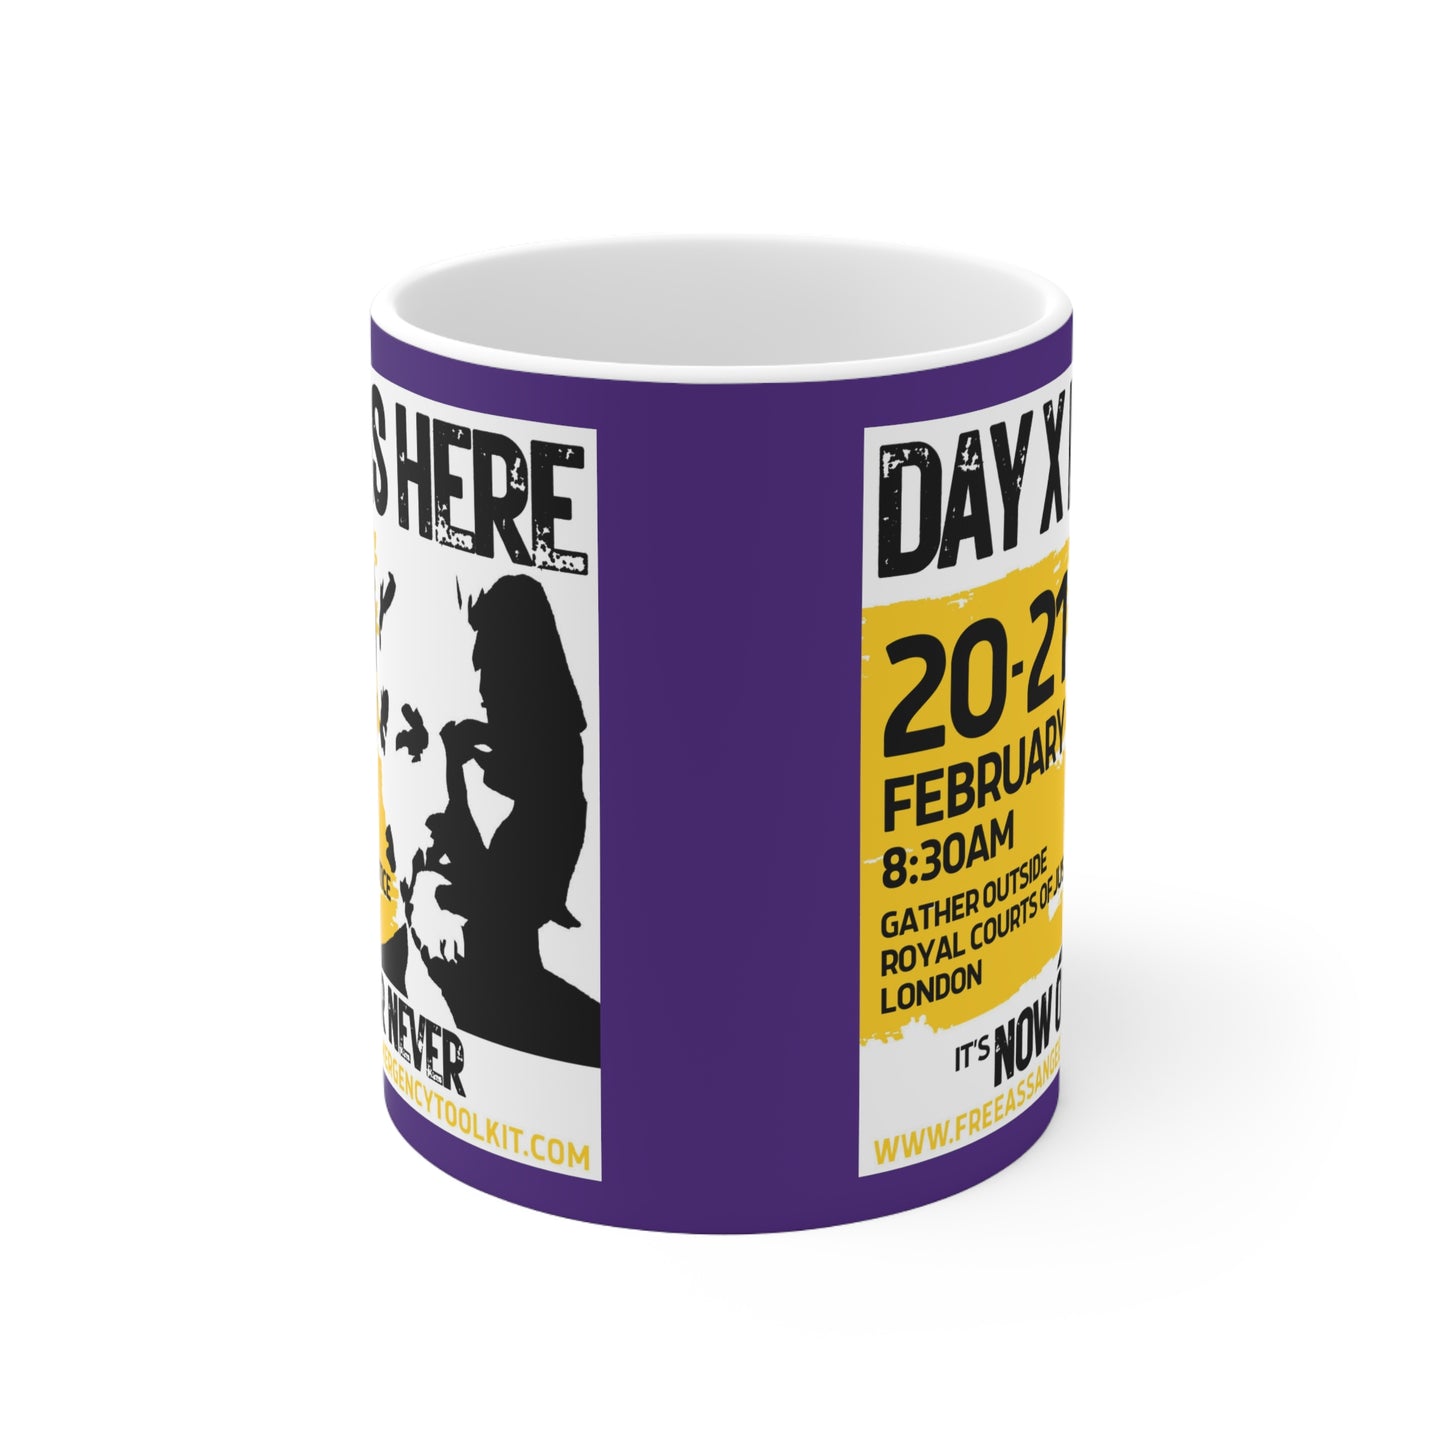 (US Printer) DAY X is Here Purple Ceramic Mug 11oz